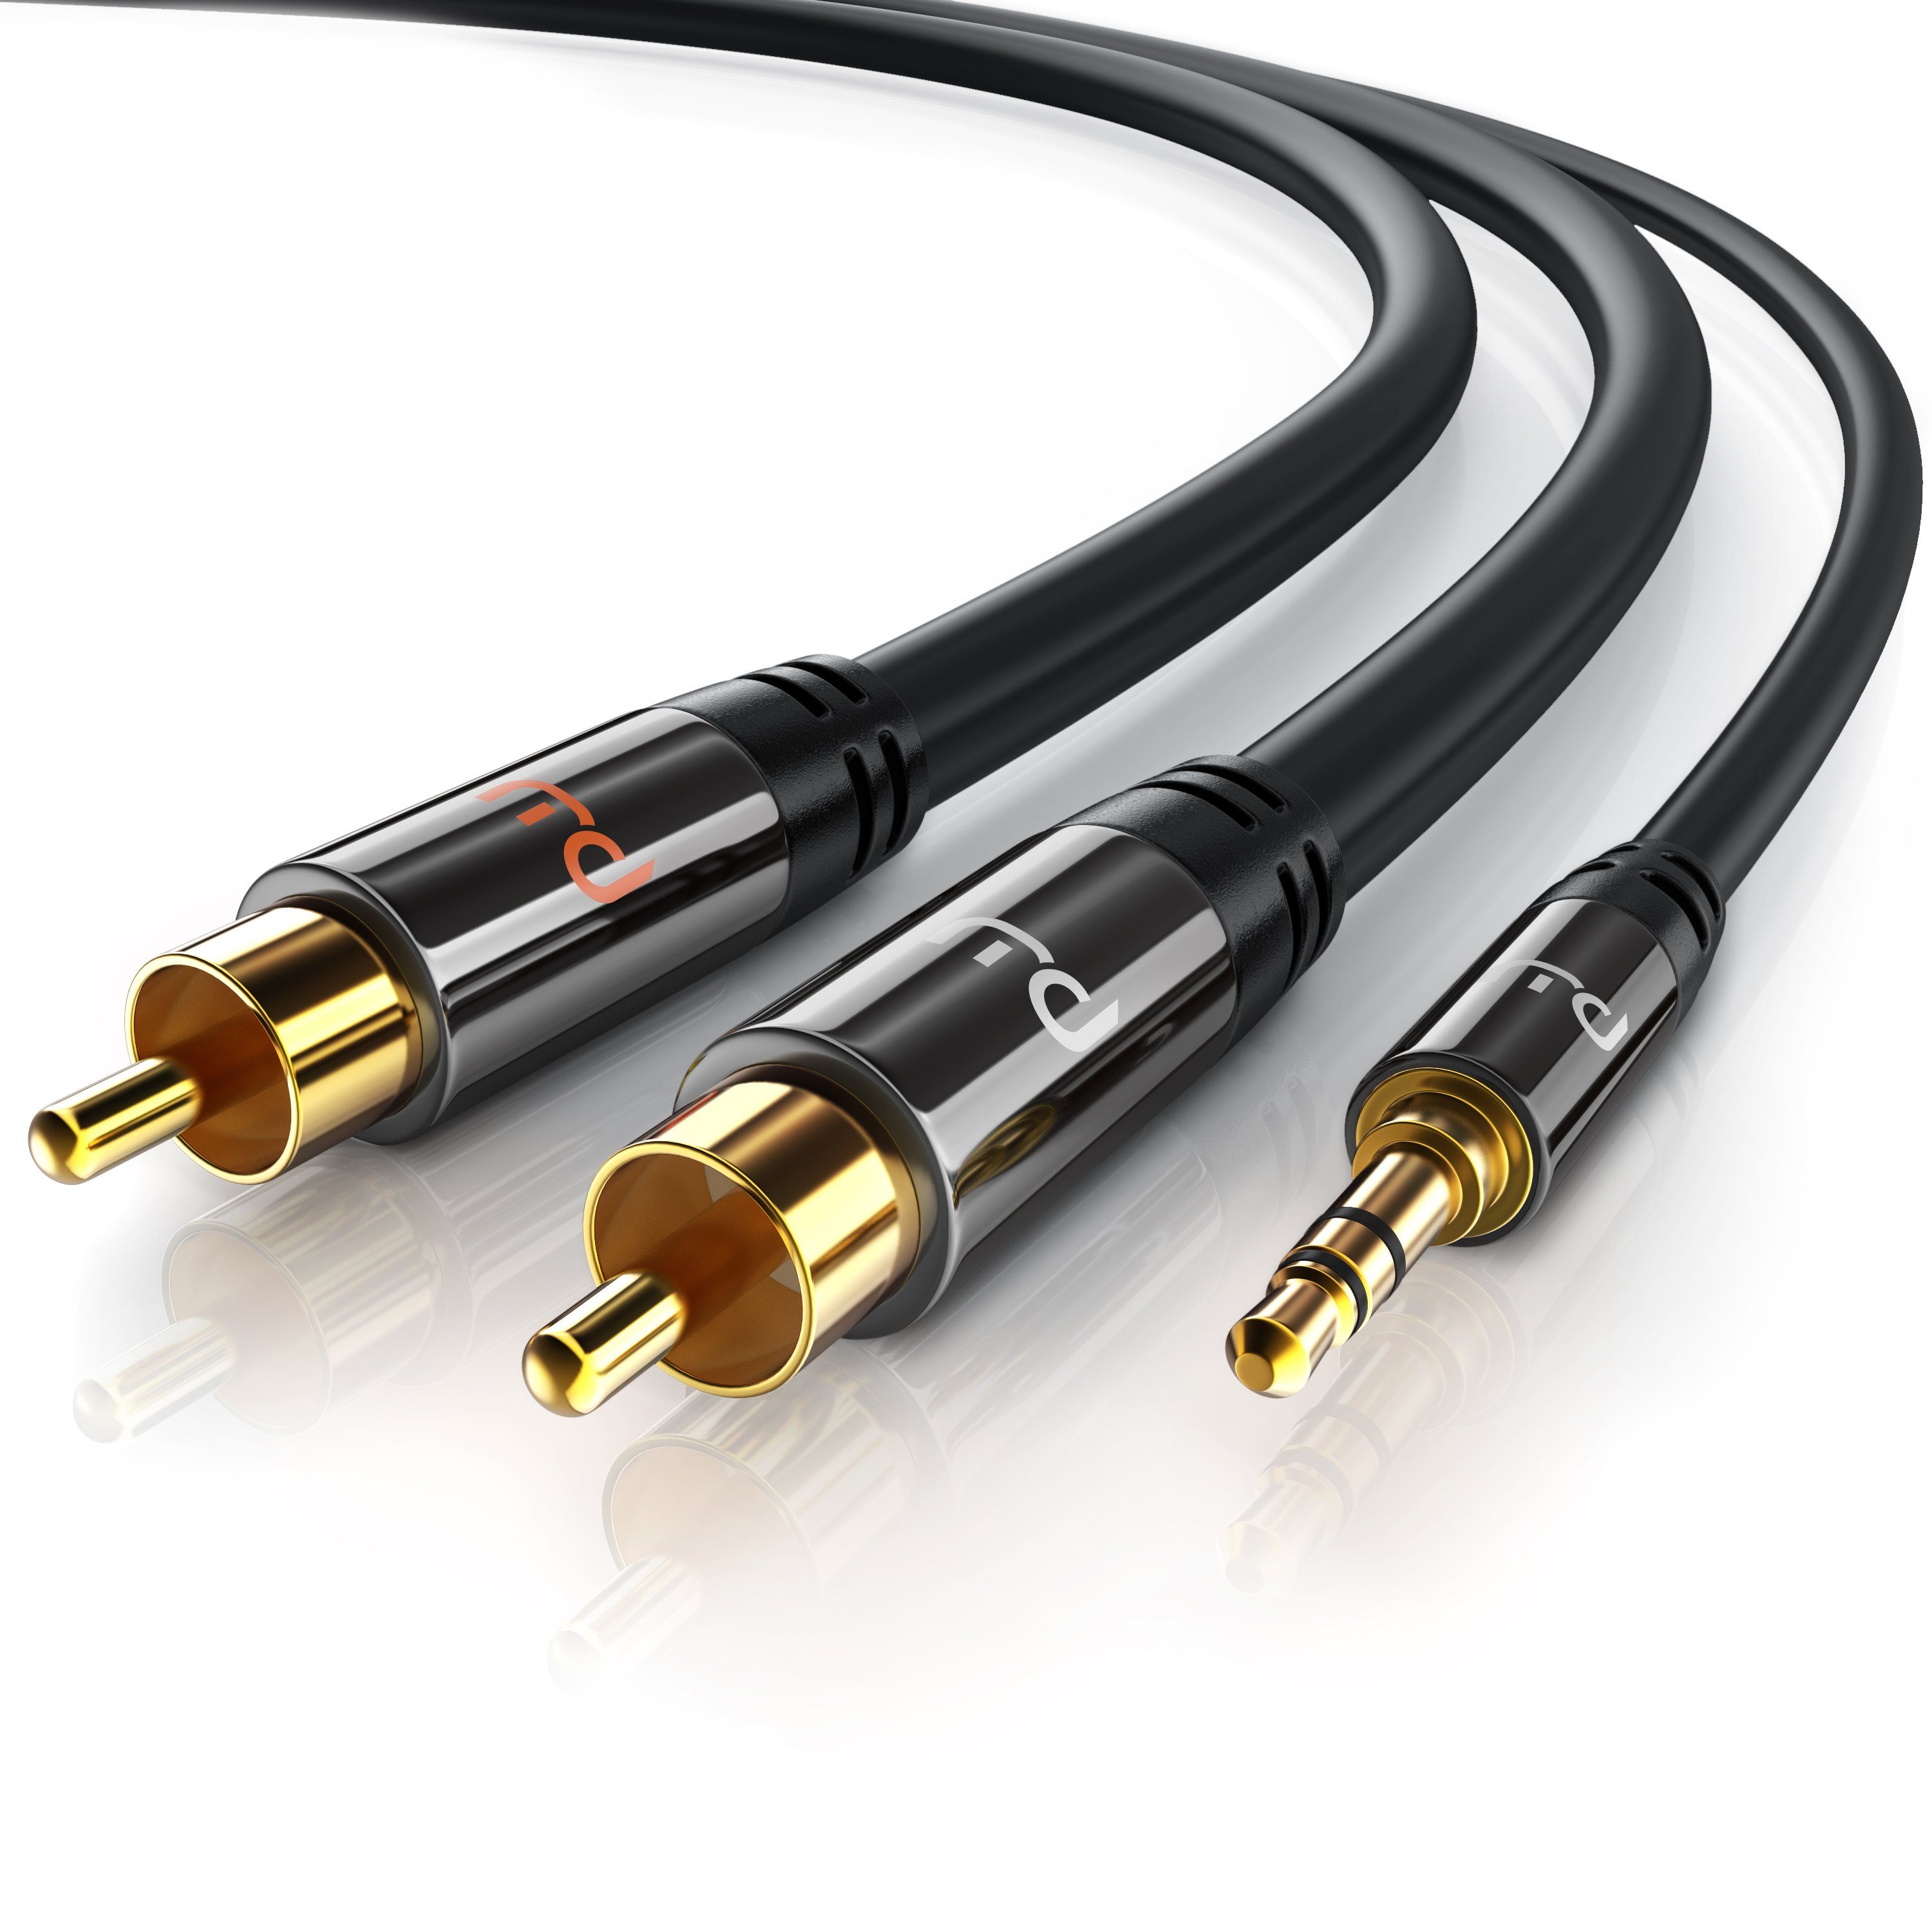 Primewire Audio-Kabel, Cinch, 3,5-mm-Klinke, RCA, AUX (50 cm), Stereo HiFi Audio-Adapter mehrfach geschirmt - 0,5m